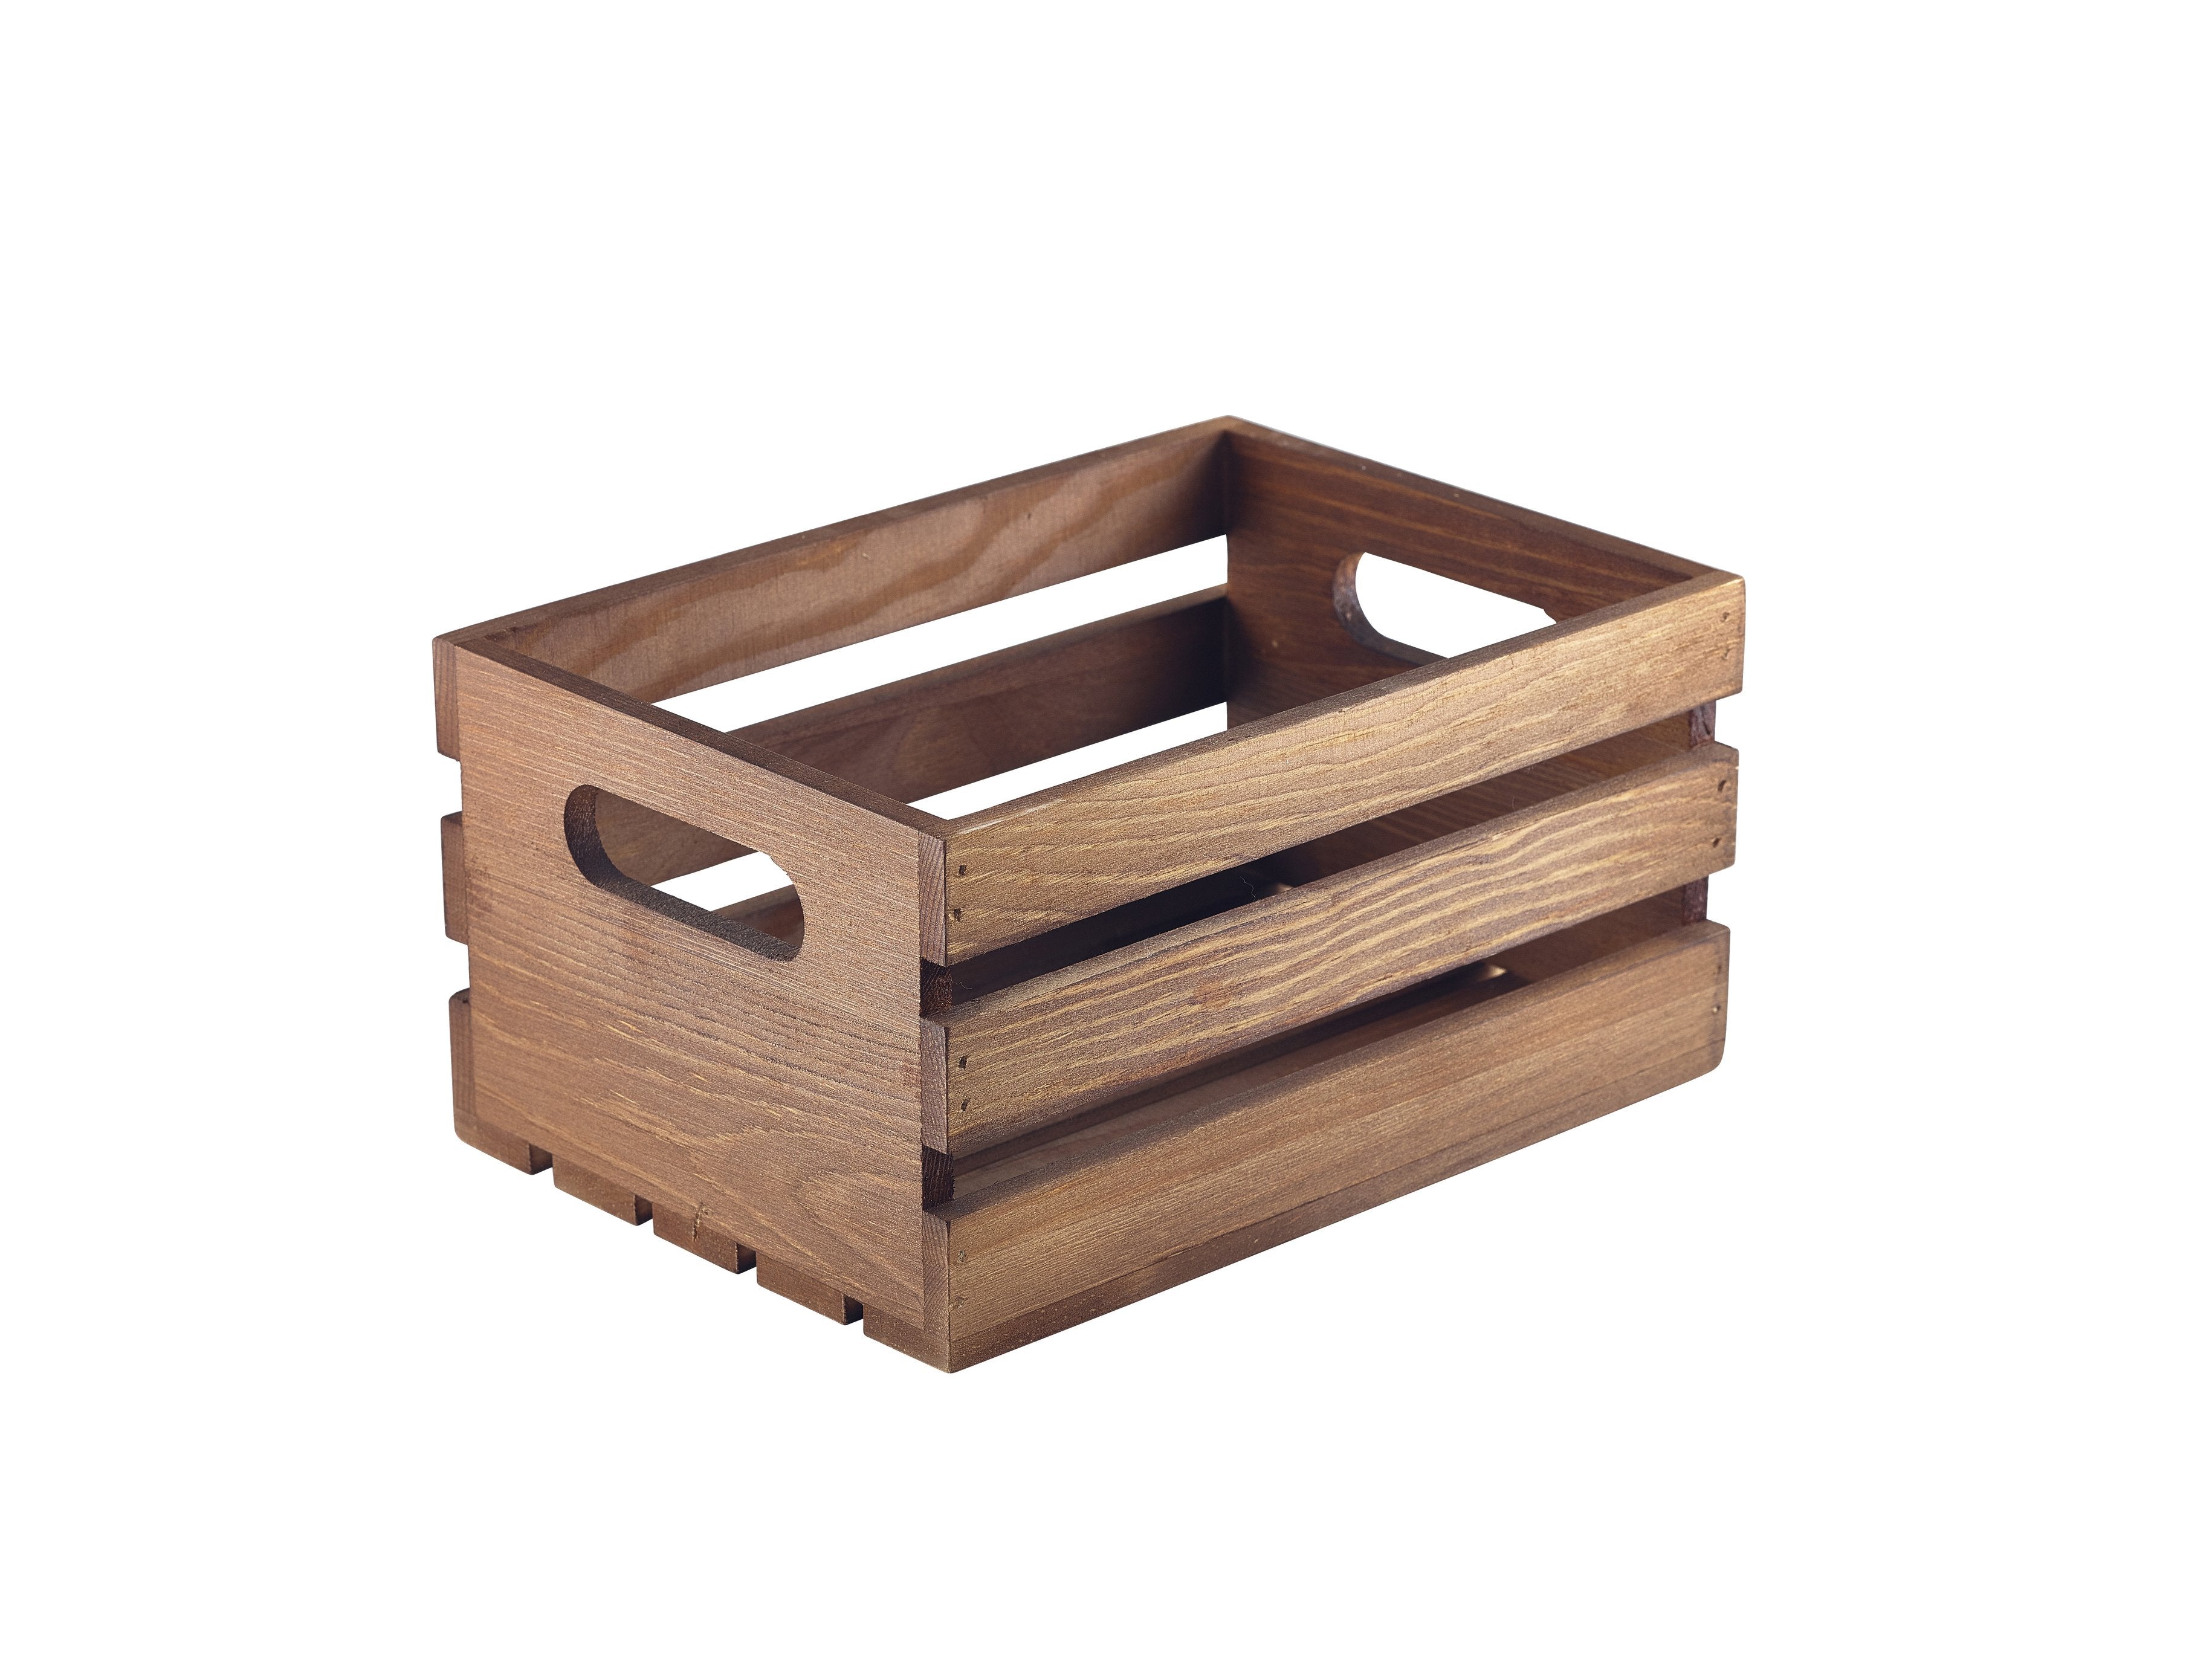 Wooden Crate Dark Rustic Finish 21.5x15x10.8cm